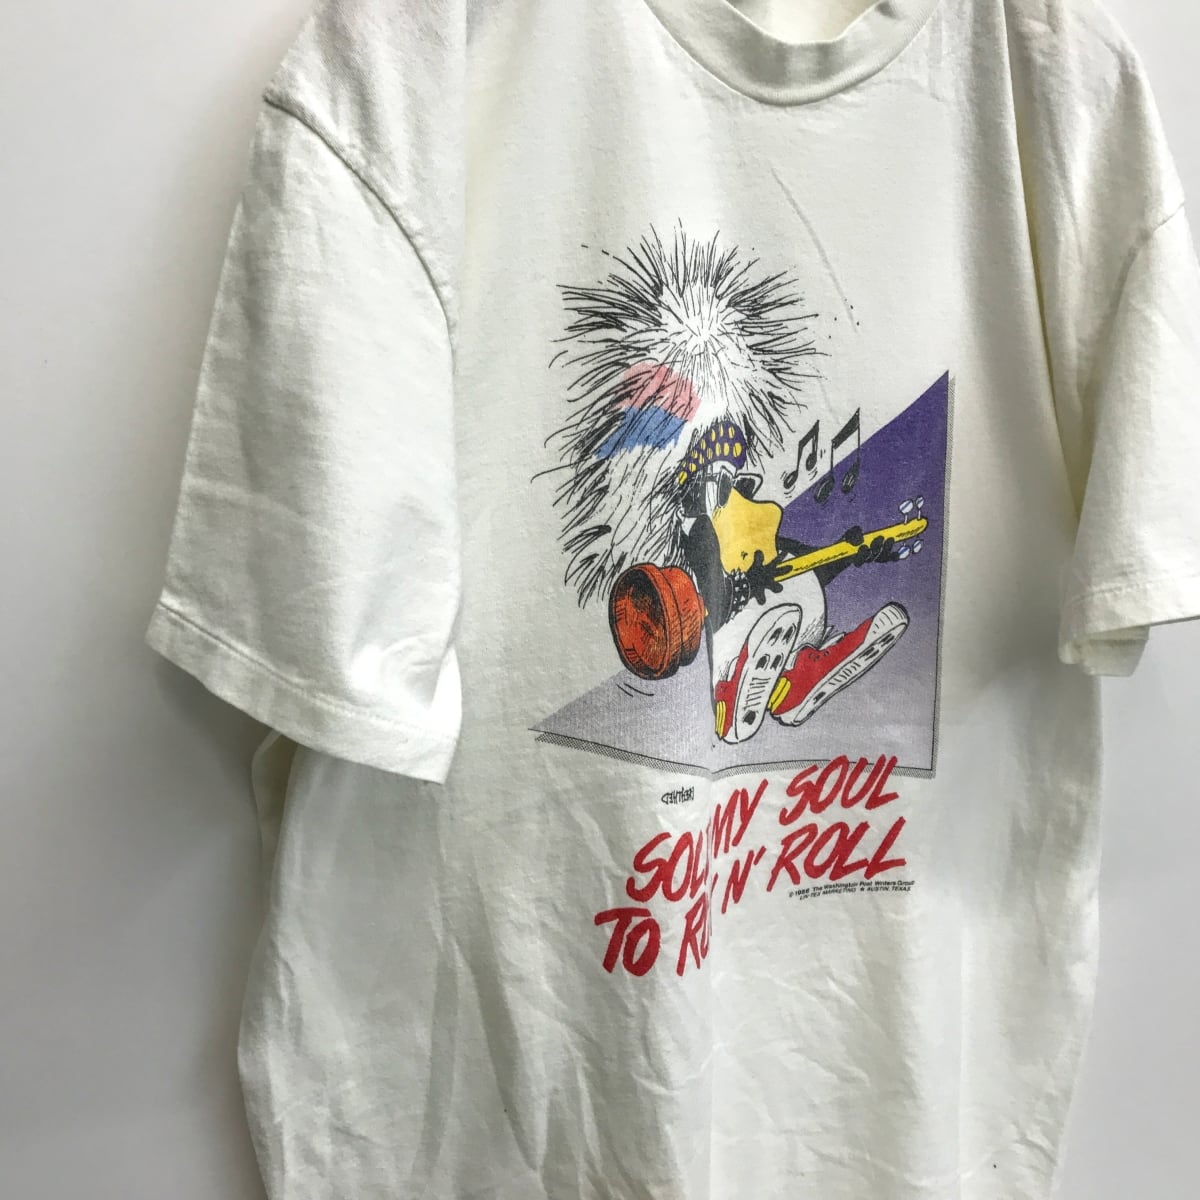 Vintage 80s メッシュシャツ